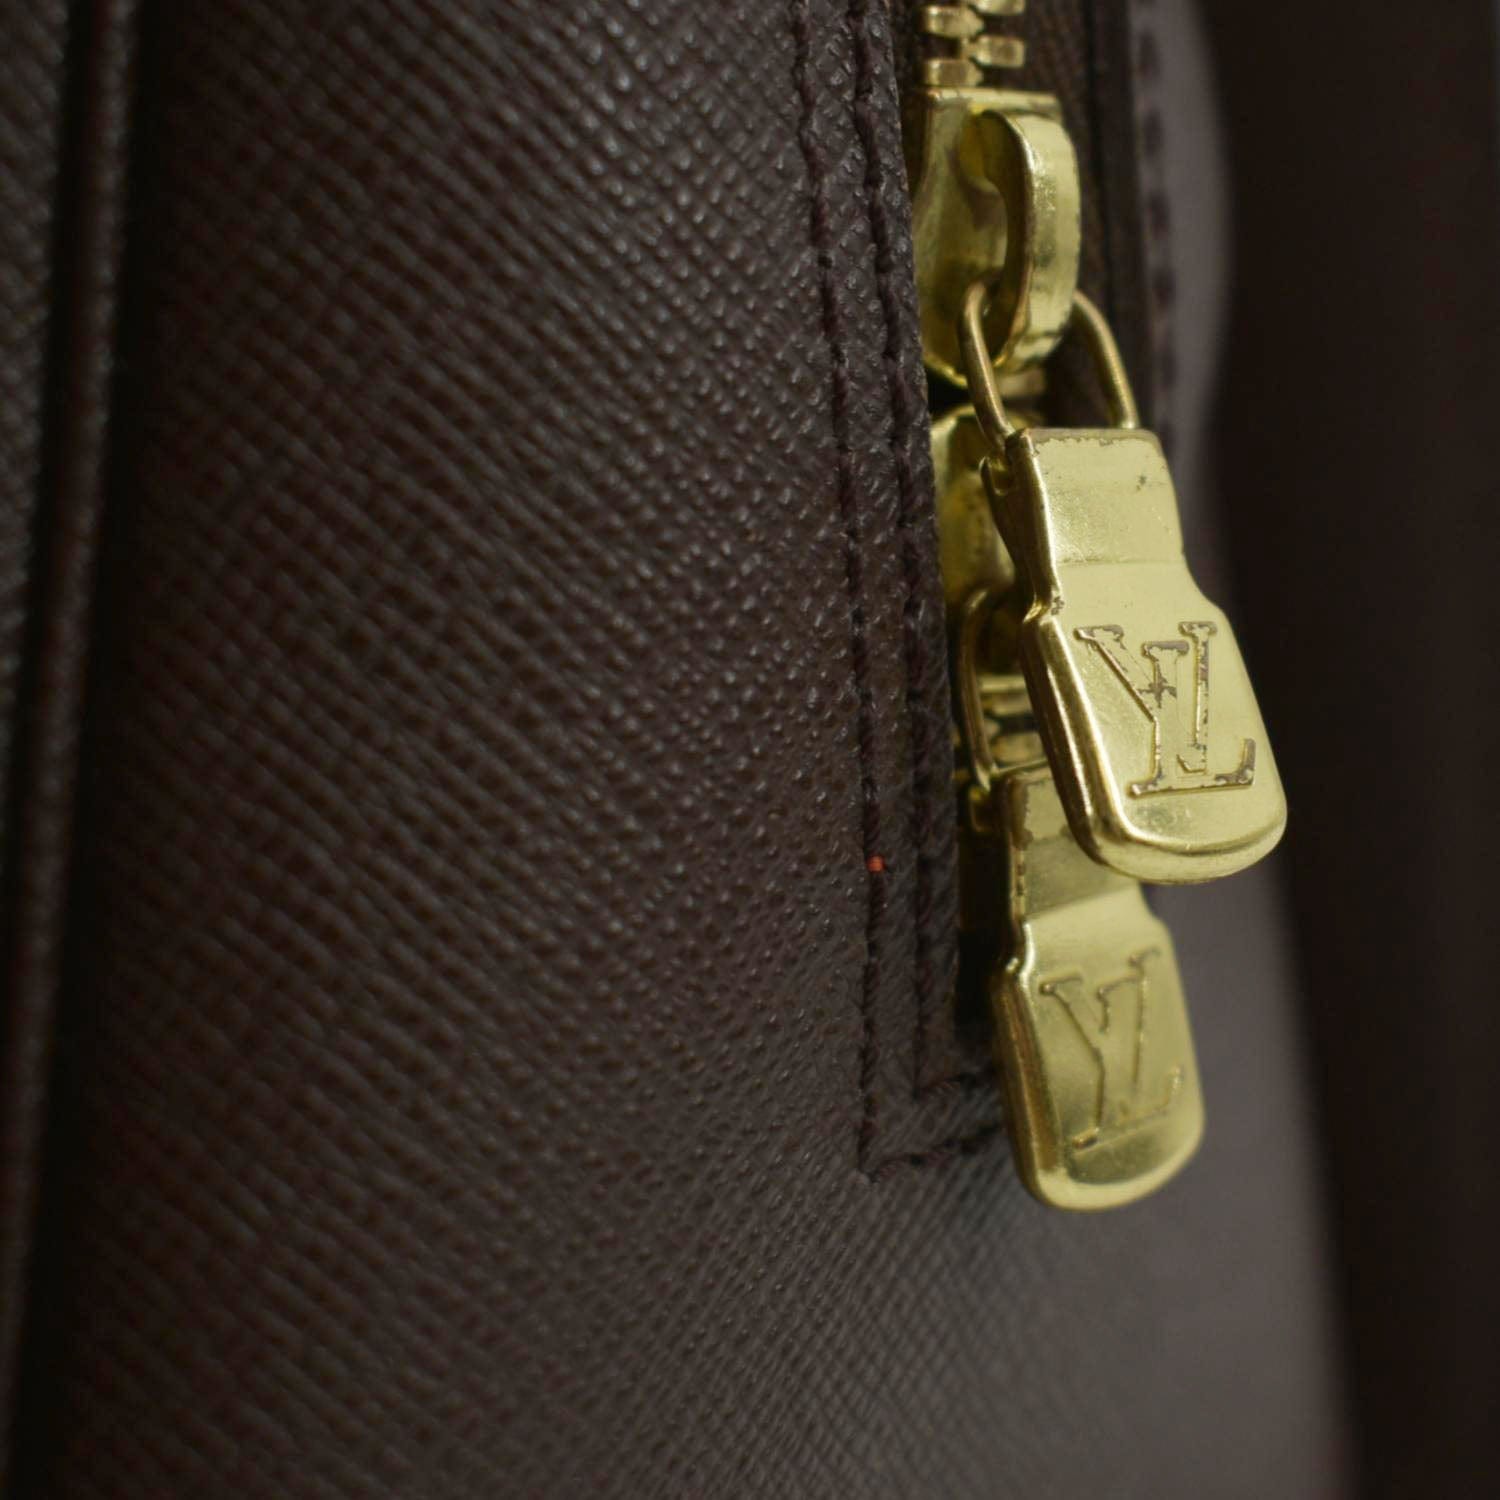 Onatah leather handbag Louis Vuitton Brown in Leather - 37921989